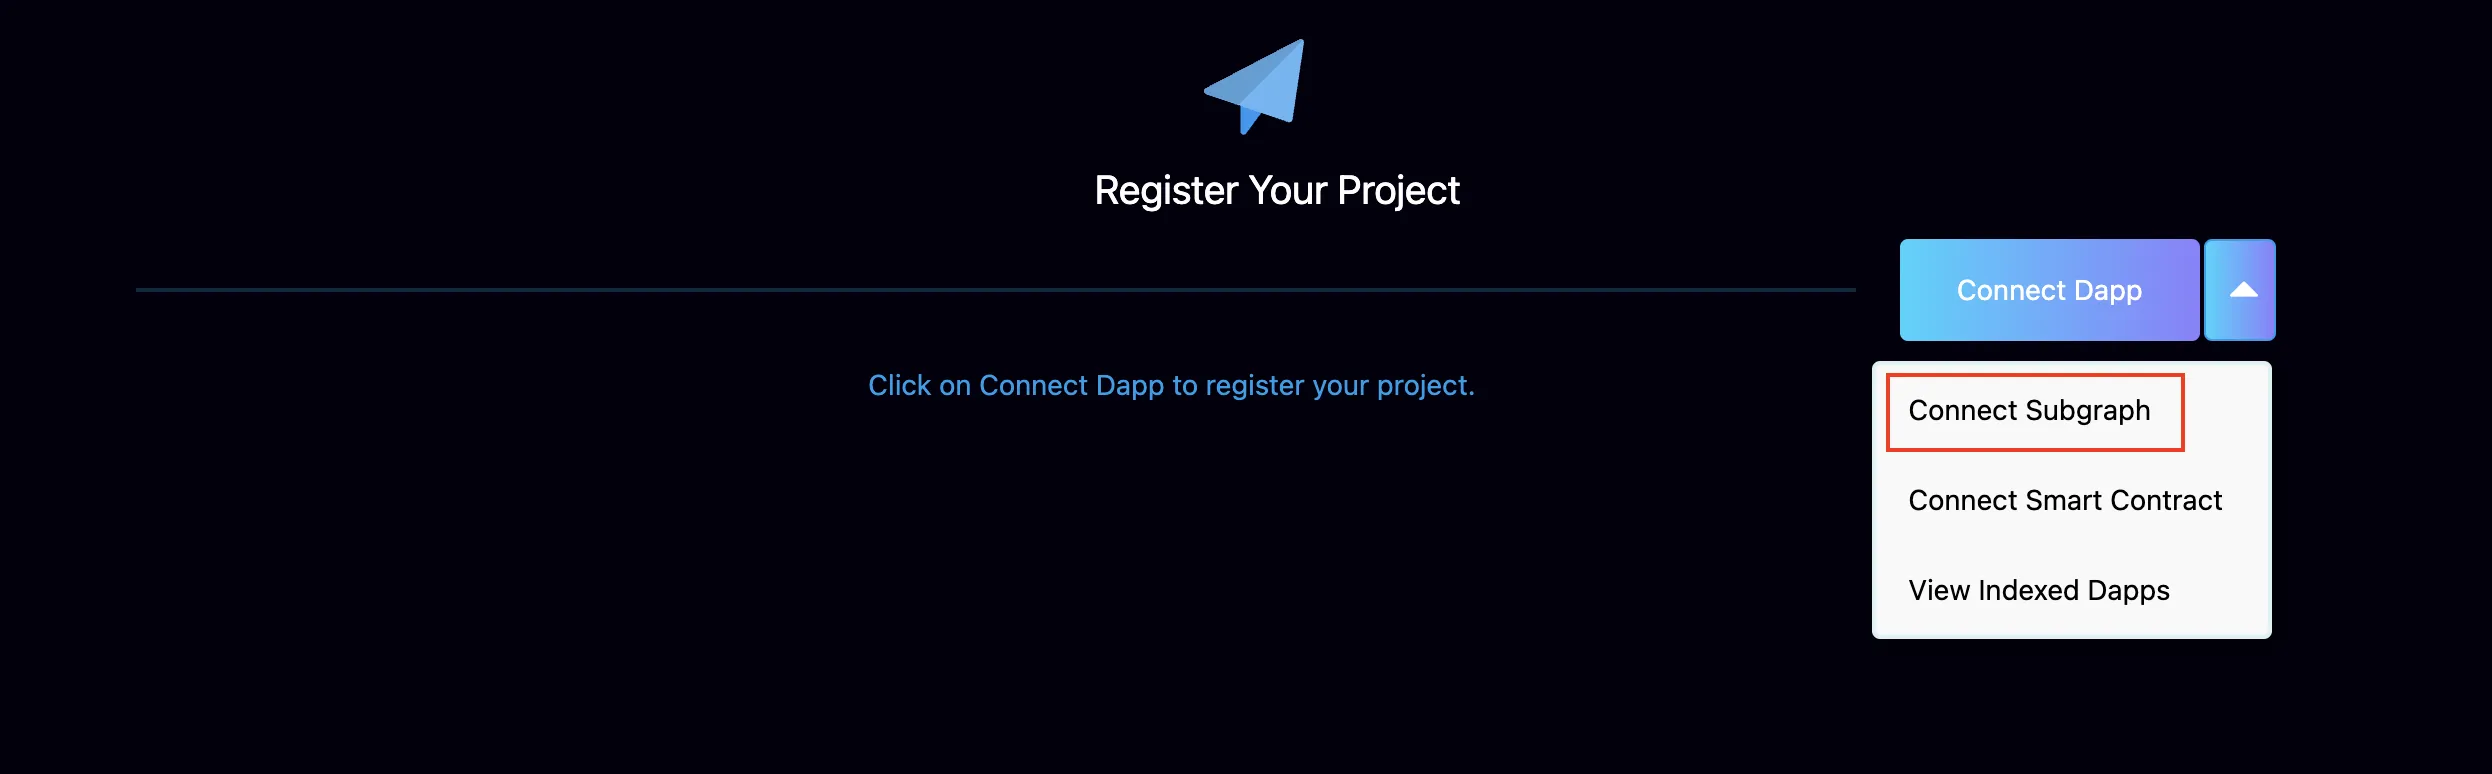 Connect dapp